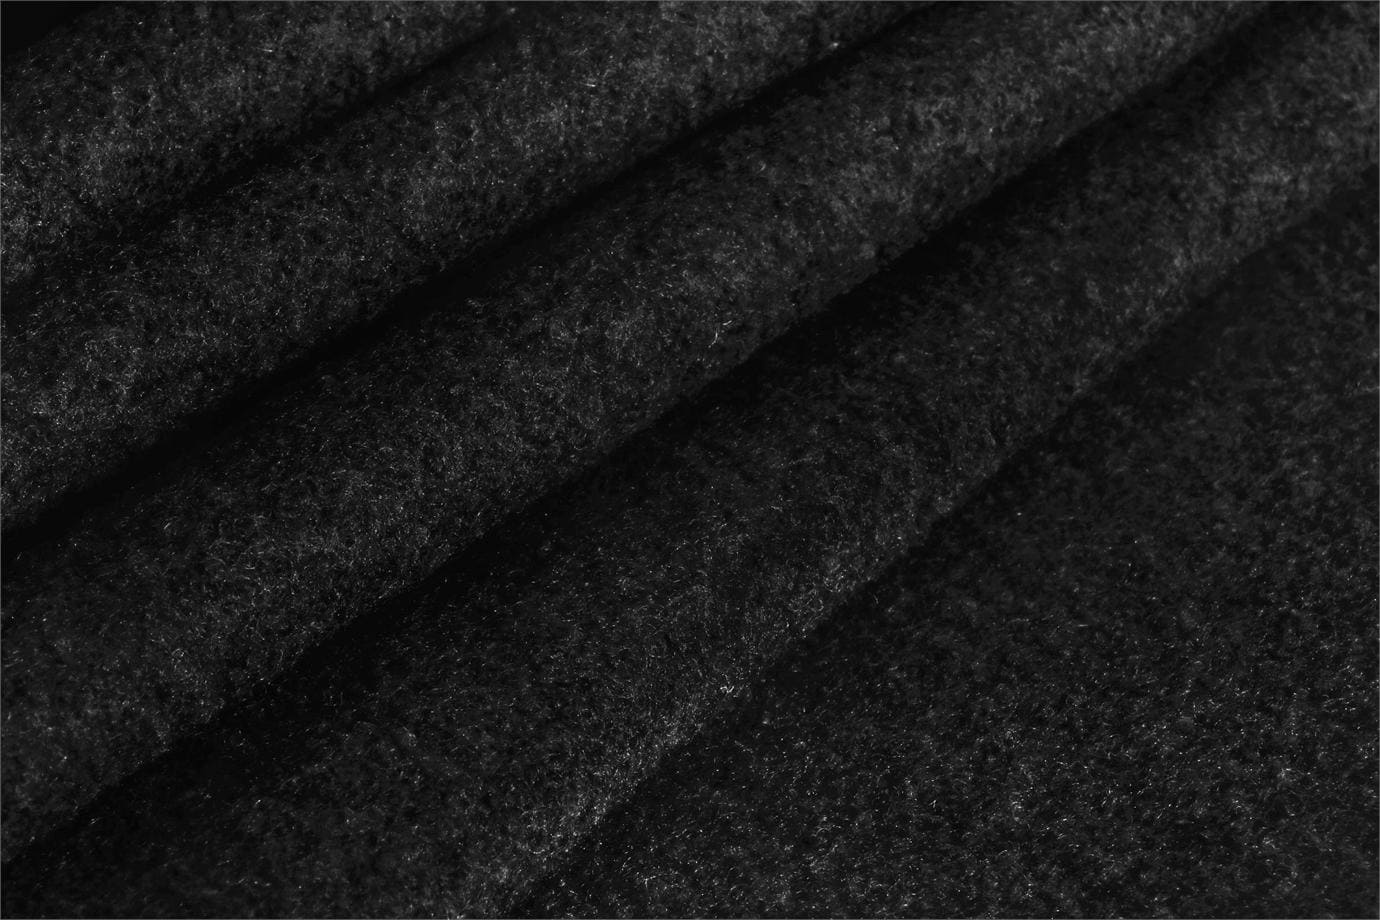 Black Panno 000902 Coating Fabric